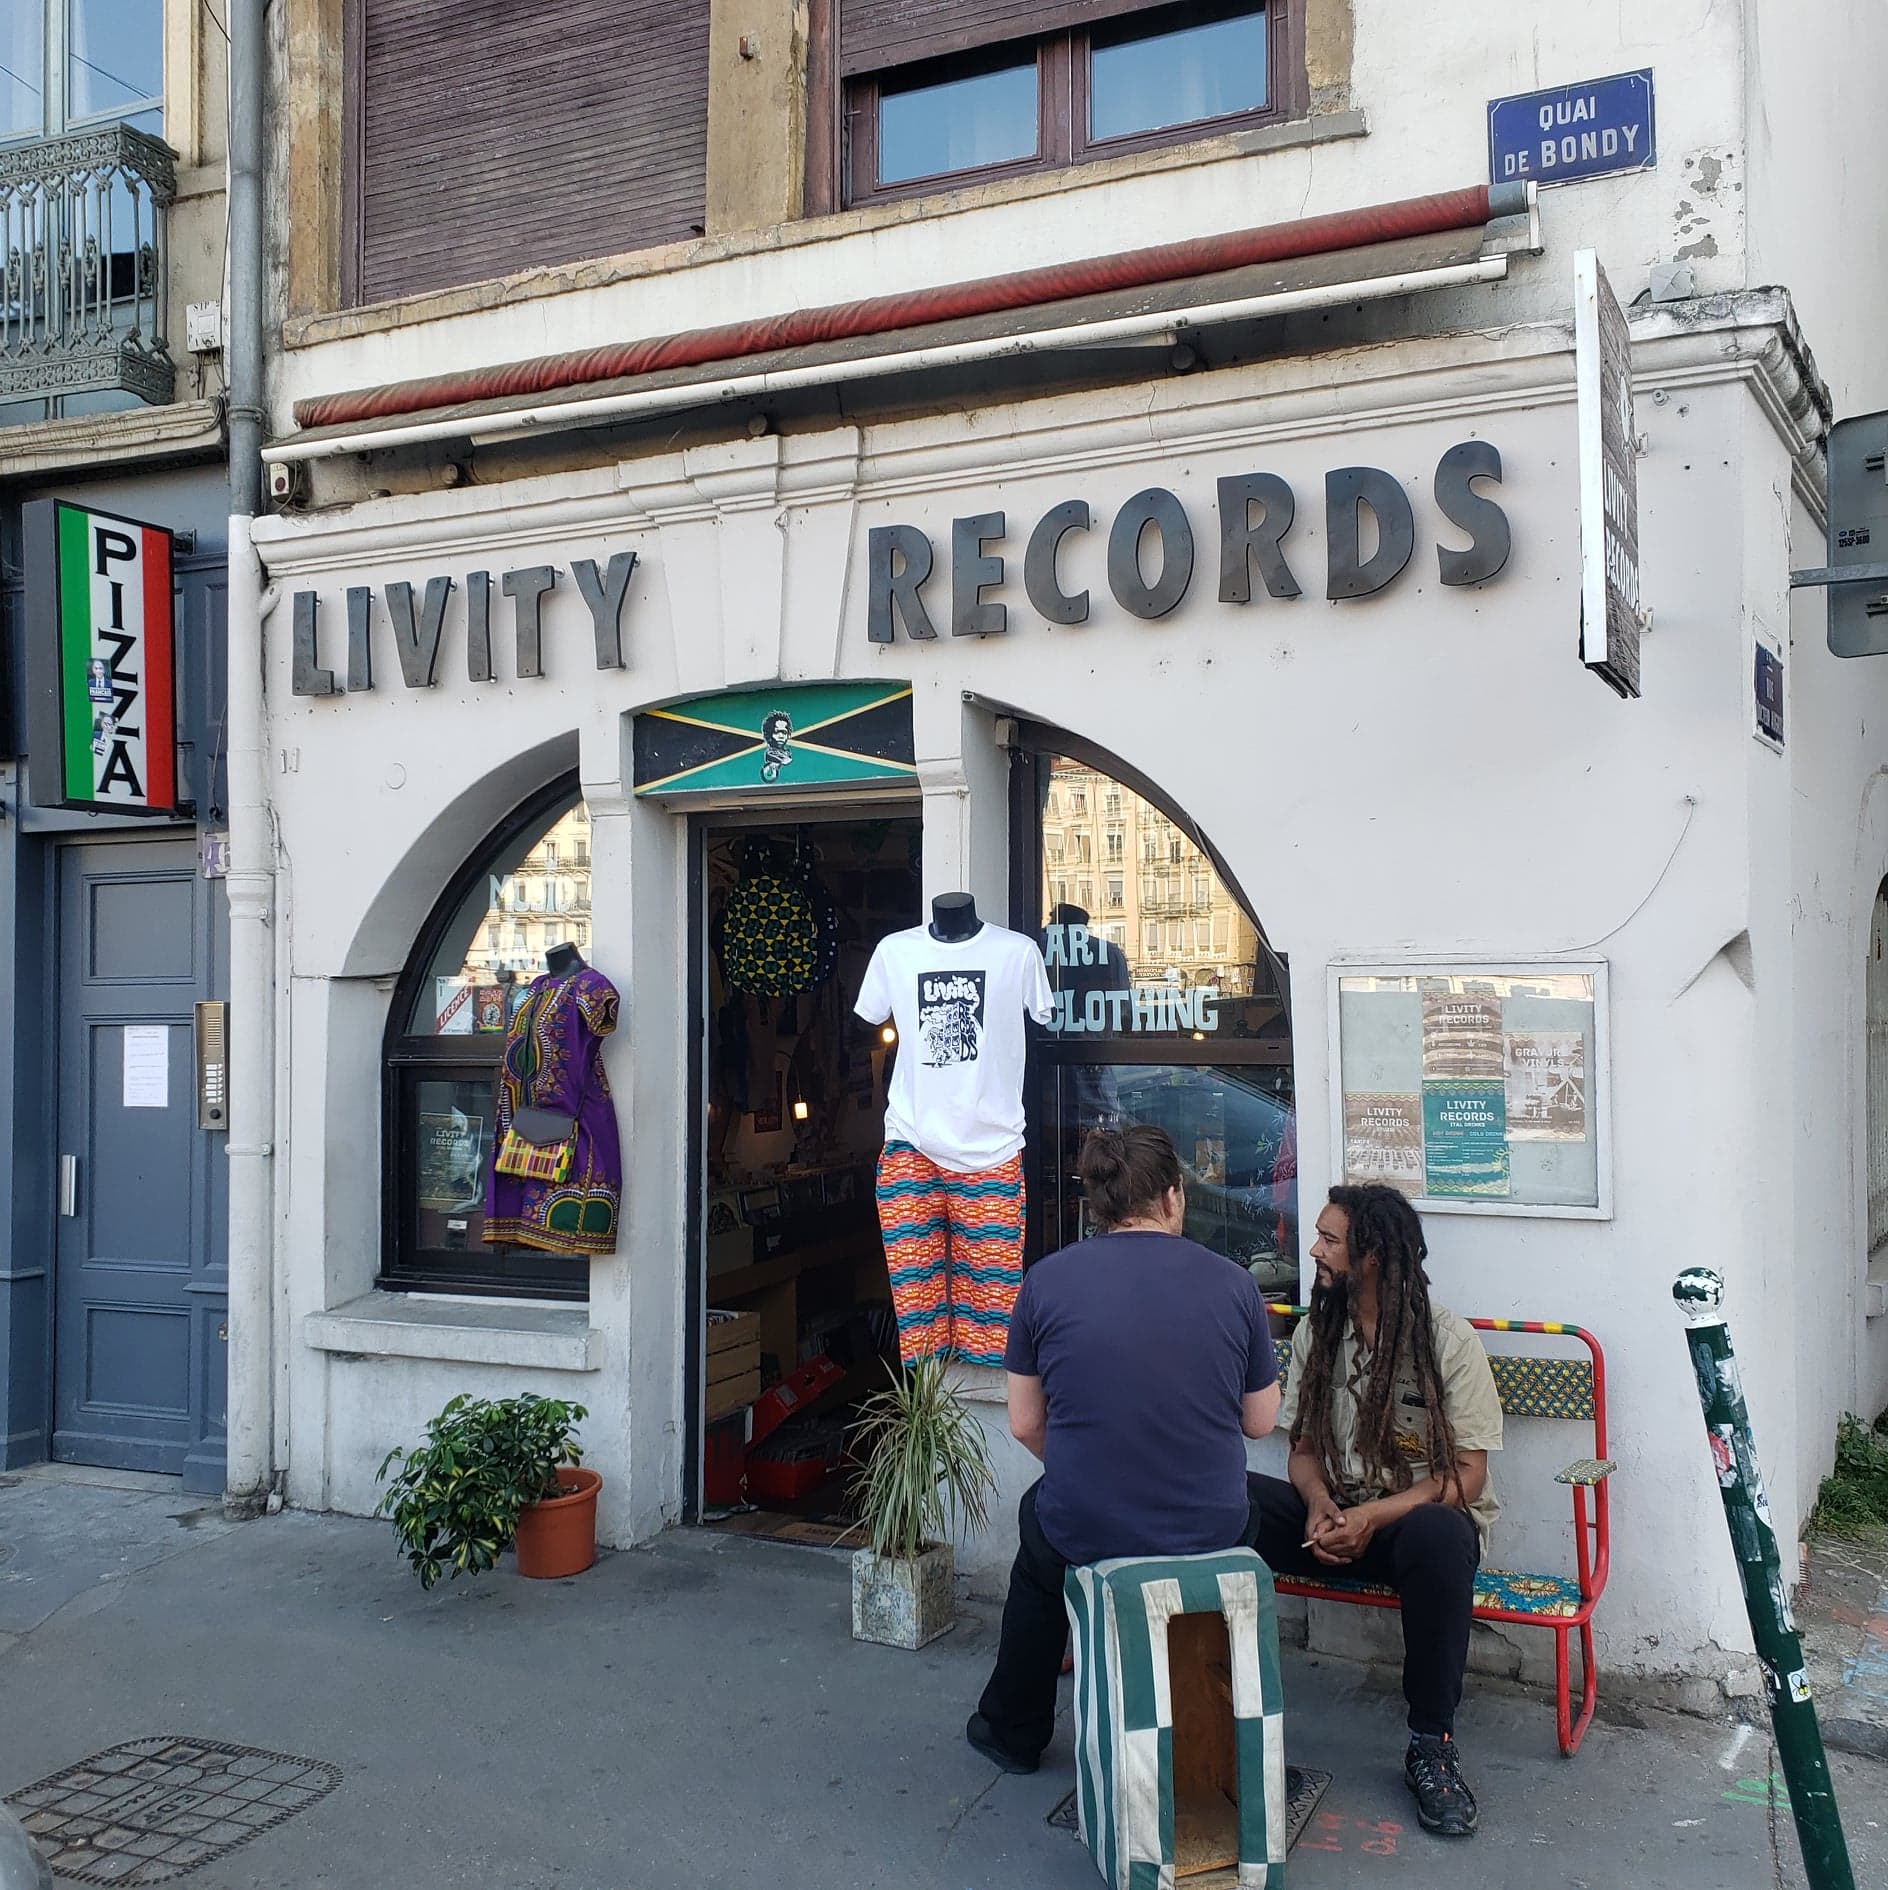 Livity Records - 2 of 6